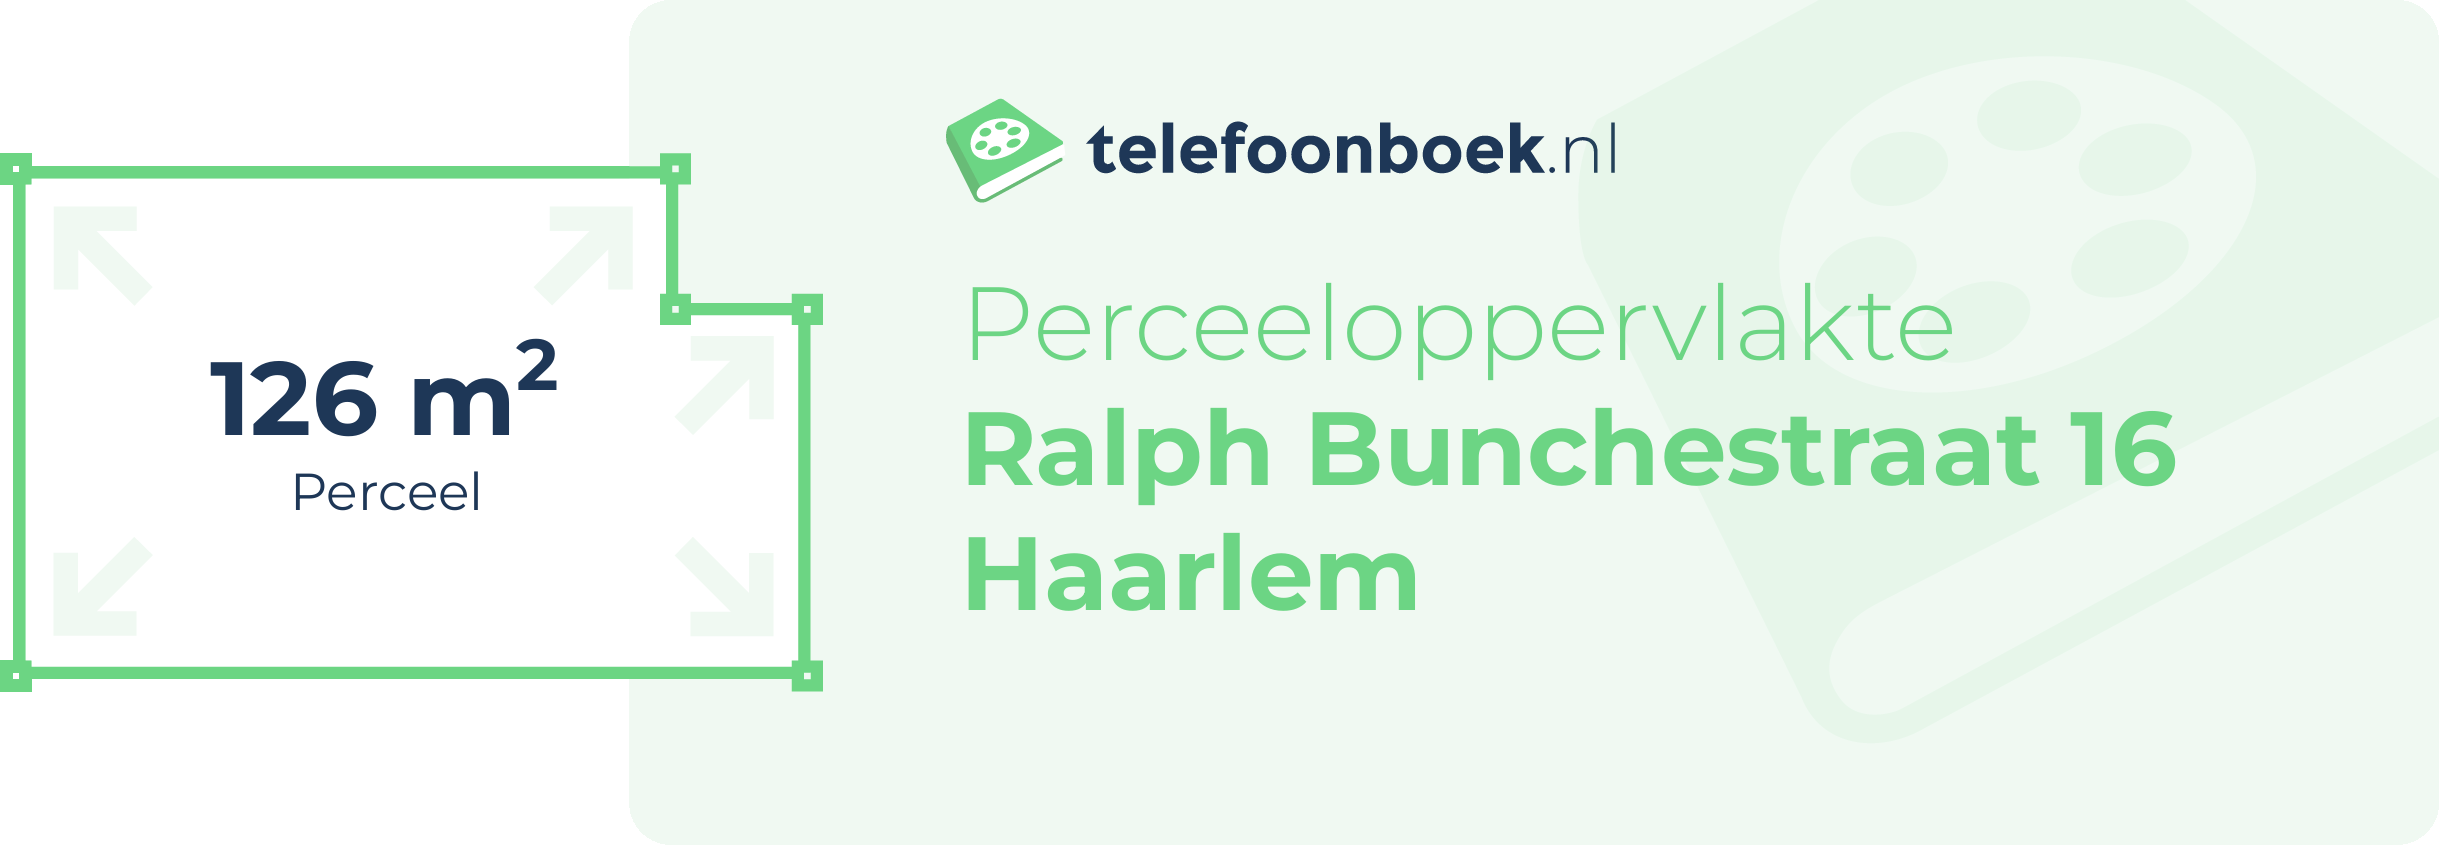 Perceeloppervlakte Ralph Bunchestraat 16 Haarlem